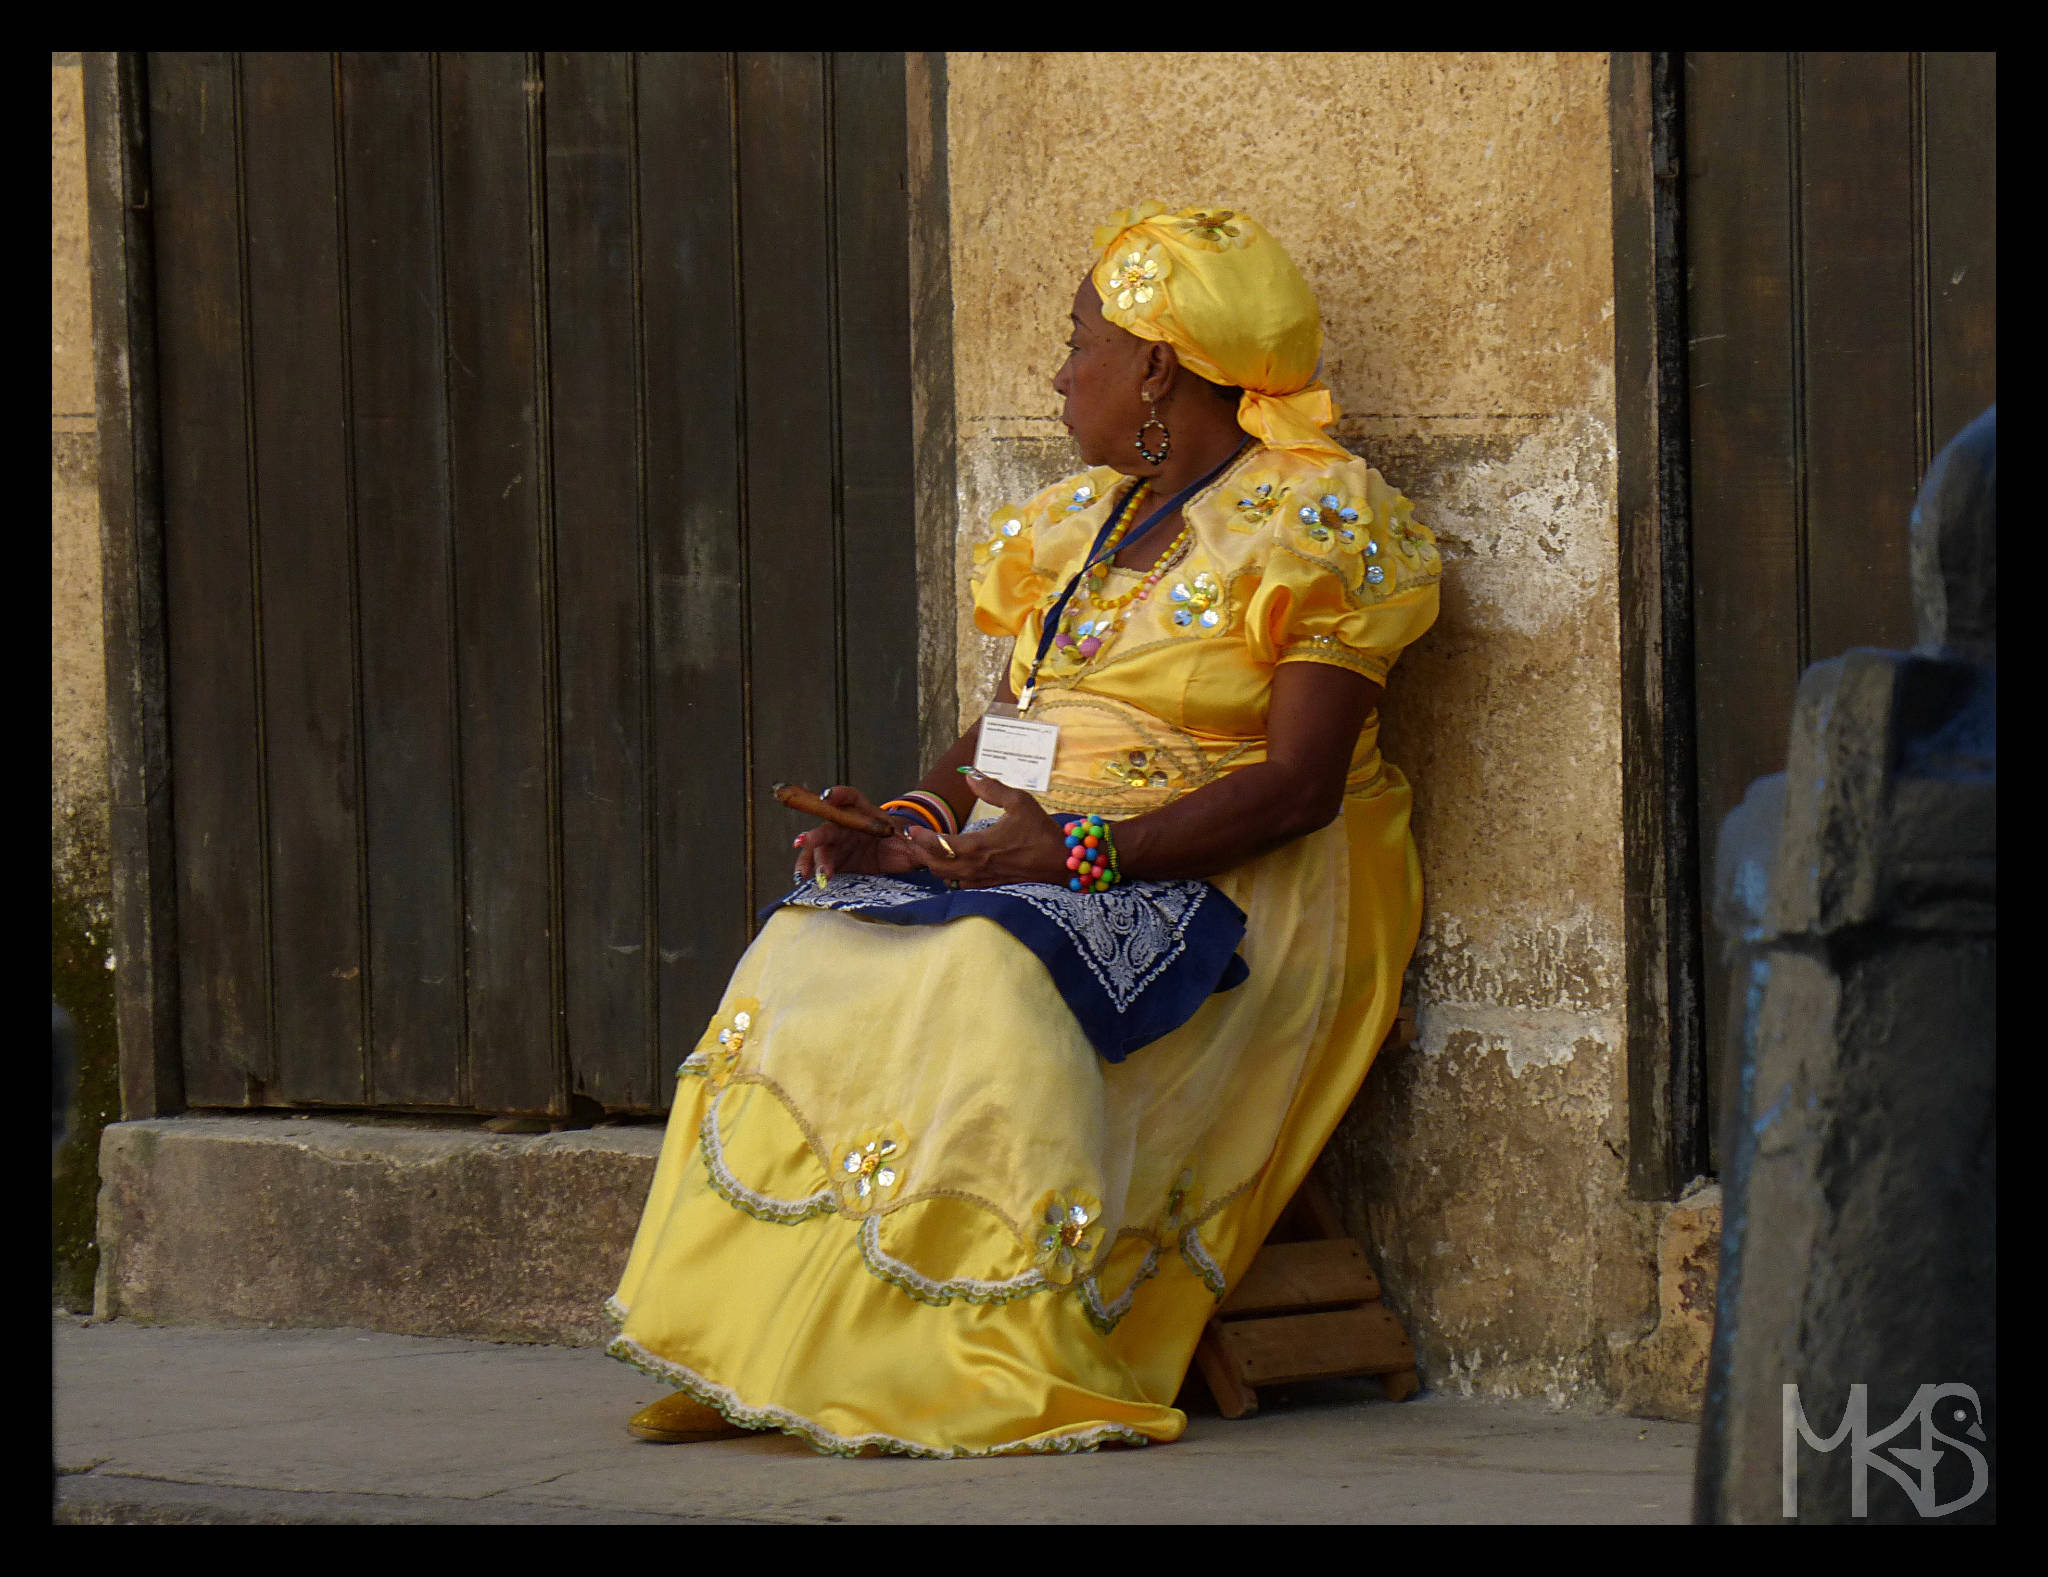 Colorful dressed woman in Havana, Cuba